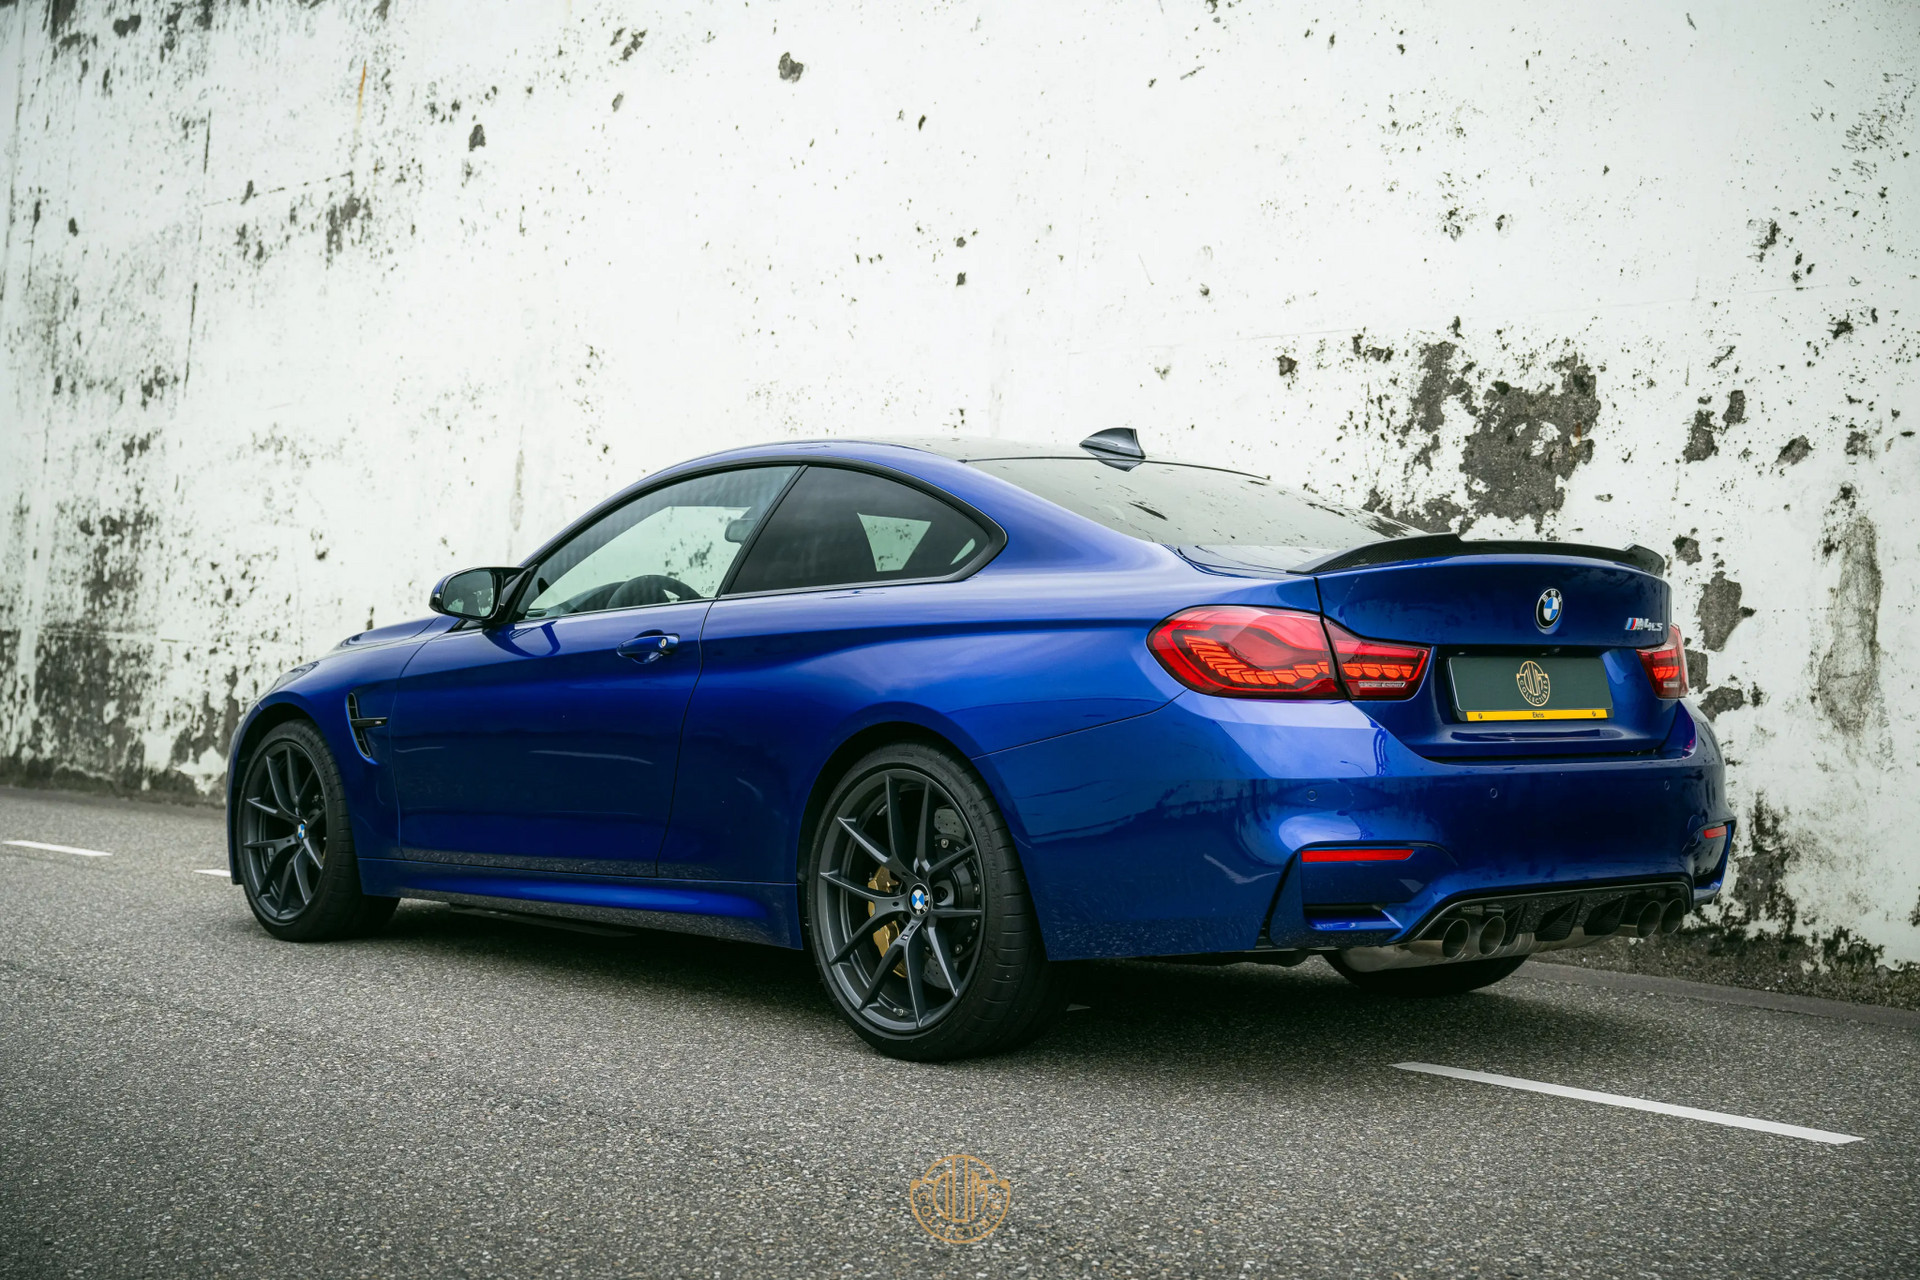 BMW 4 Serie Coupé M4 CS 2017 San marino blau metallic 73